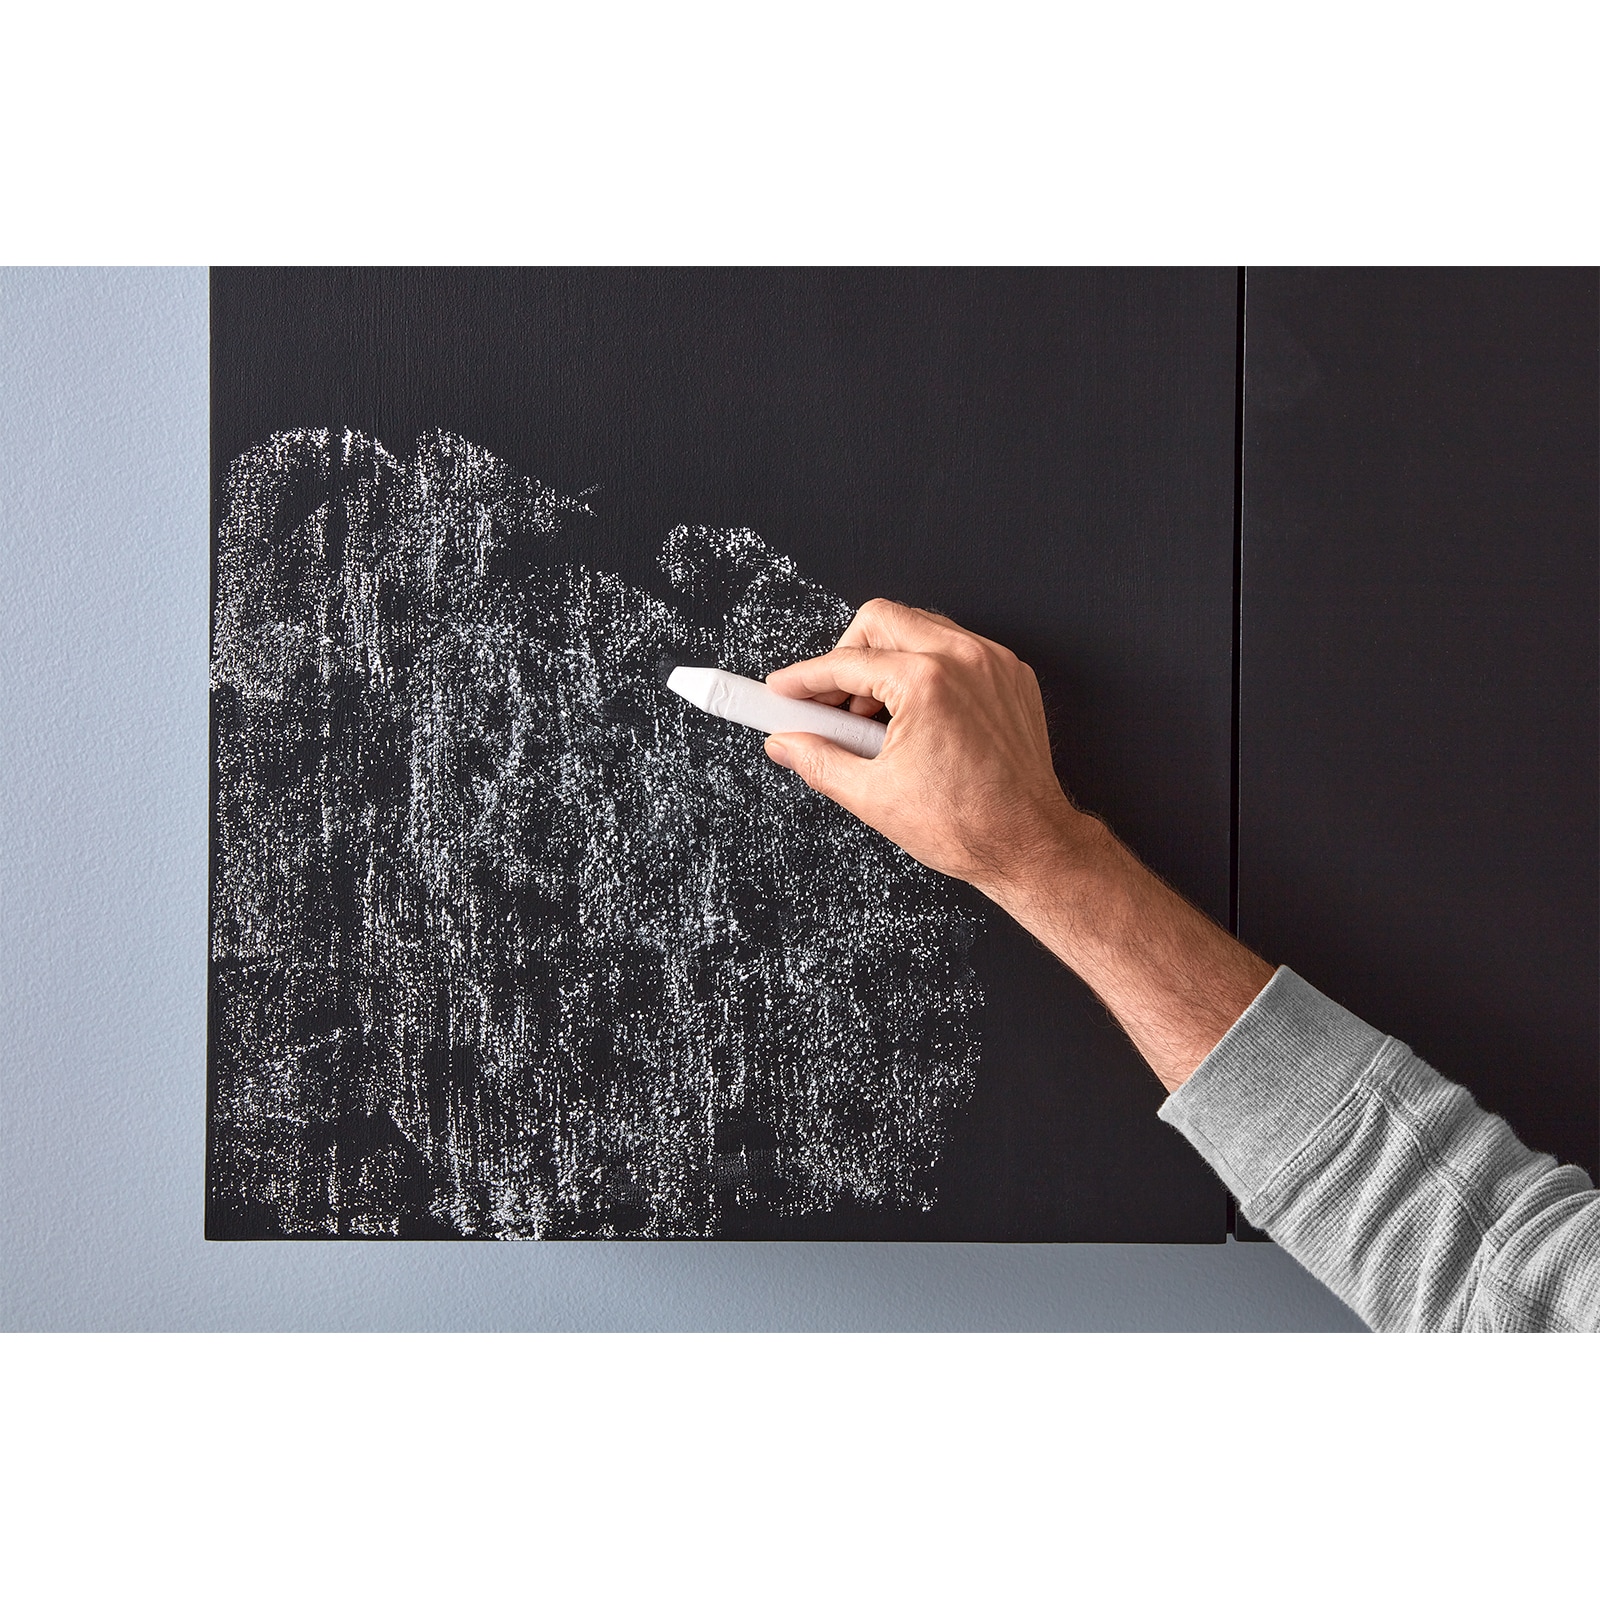 Chalkboard Paint 2 Oz. Decoart. Americana Black Chalk Paint for Glass,  Ceramic, Wood. 59 Ml. 